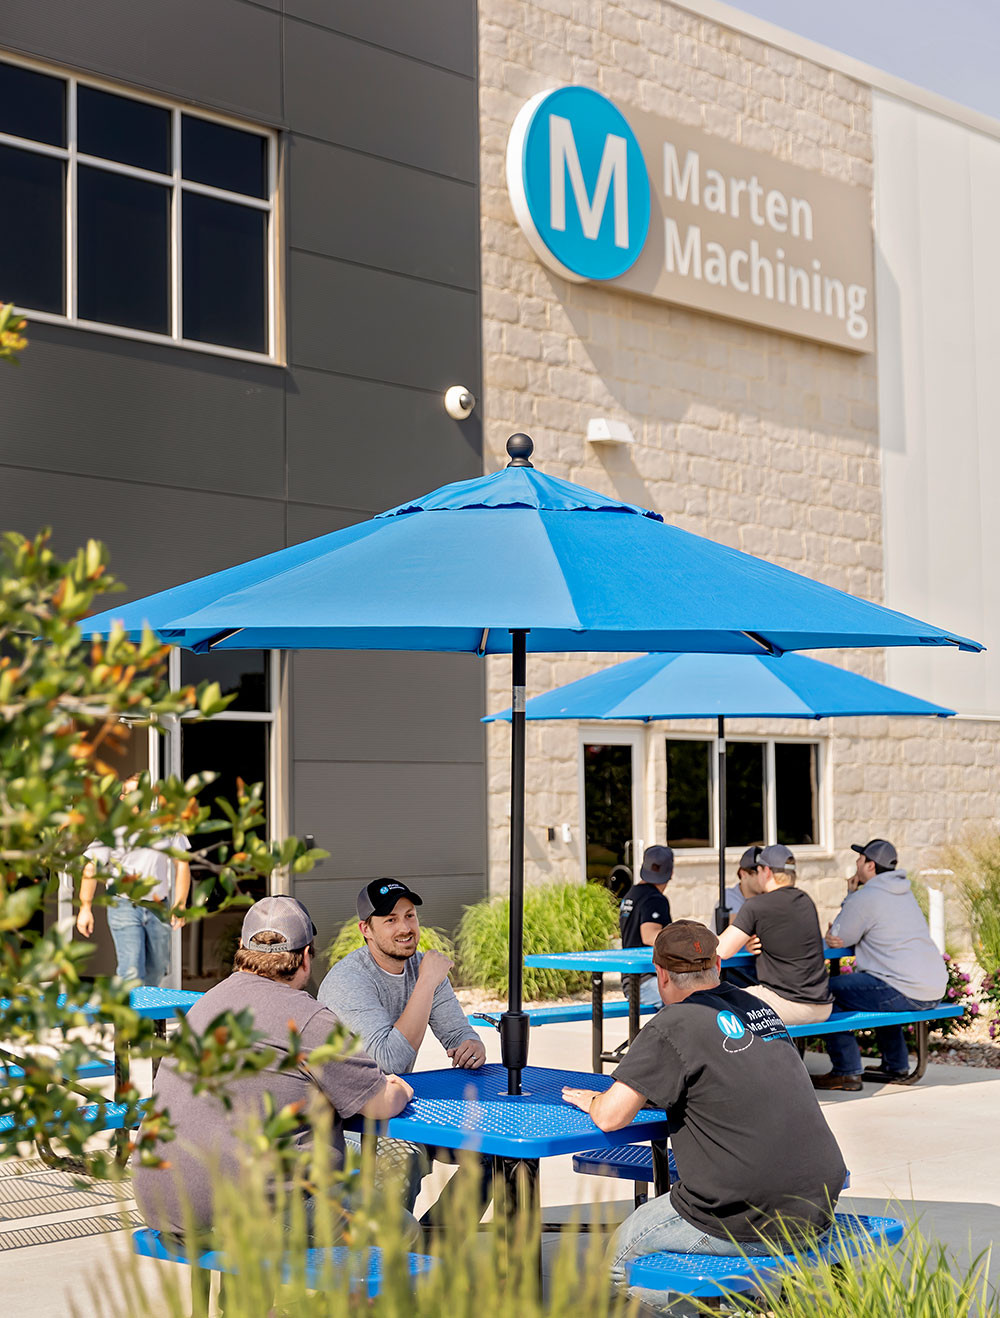 Marten Machining employees outdoor seating area